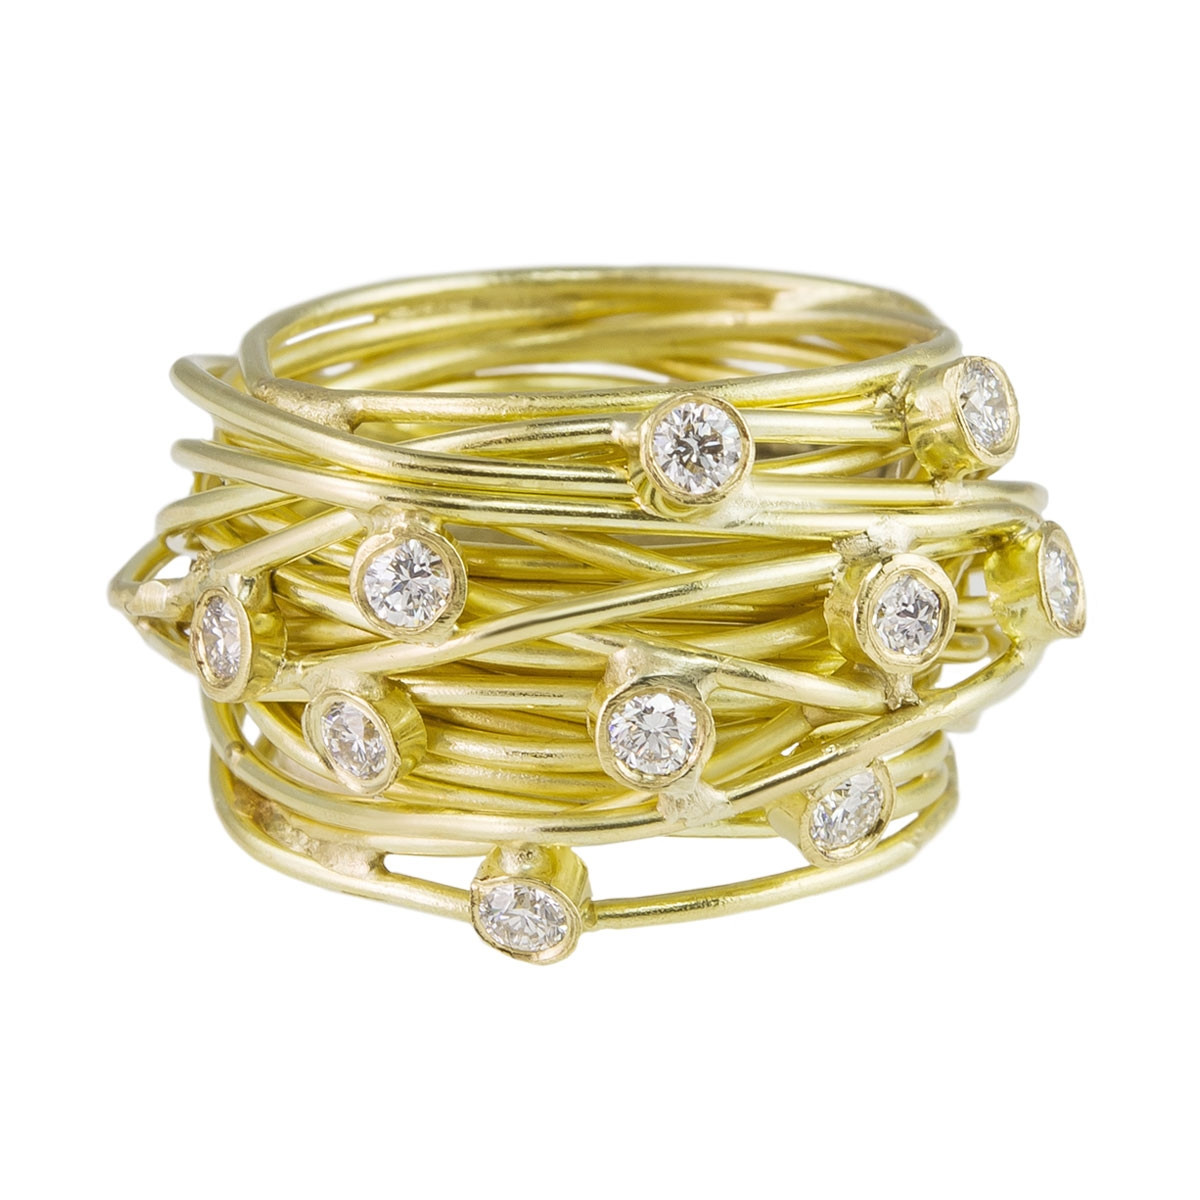 Tomfoolery; 18ct Yellow Gold Wrap Ring with White Diamonds, Shimara Carlow